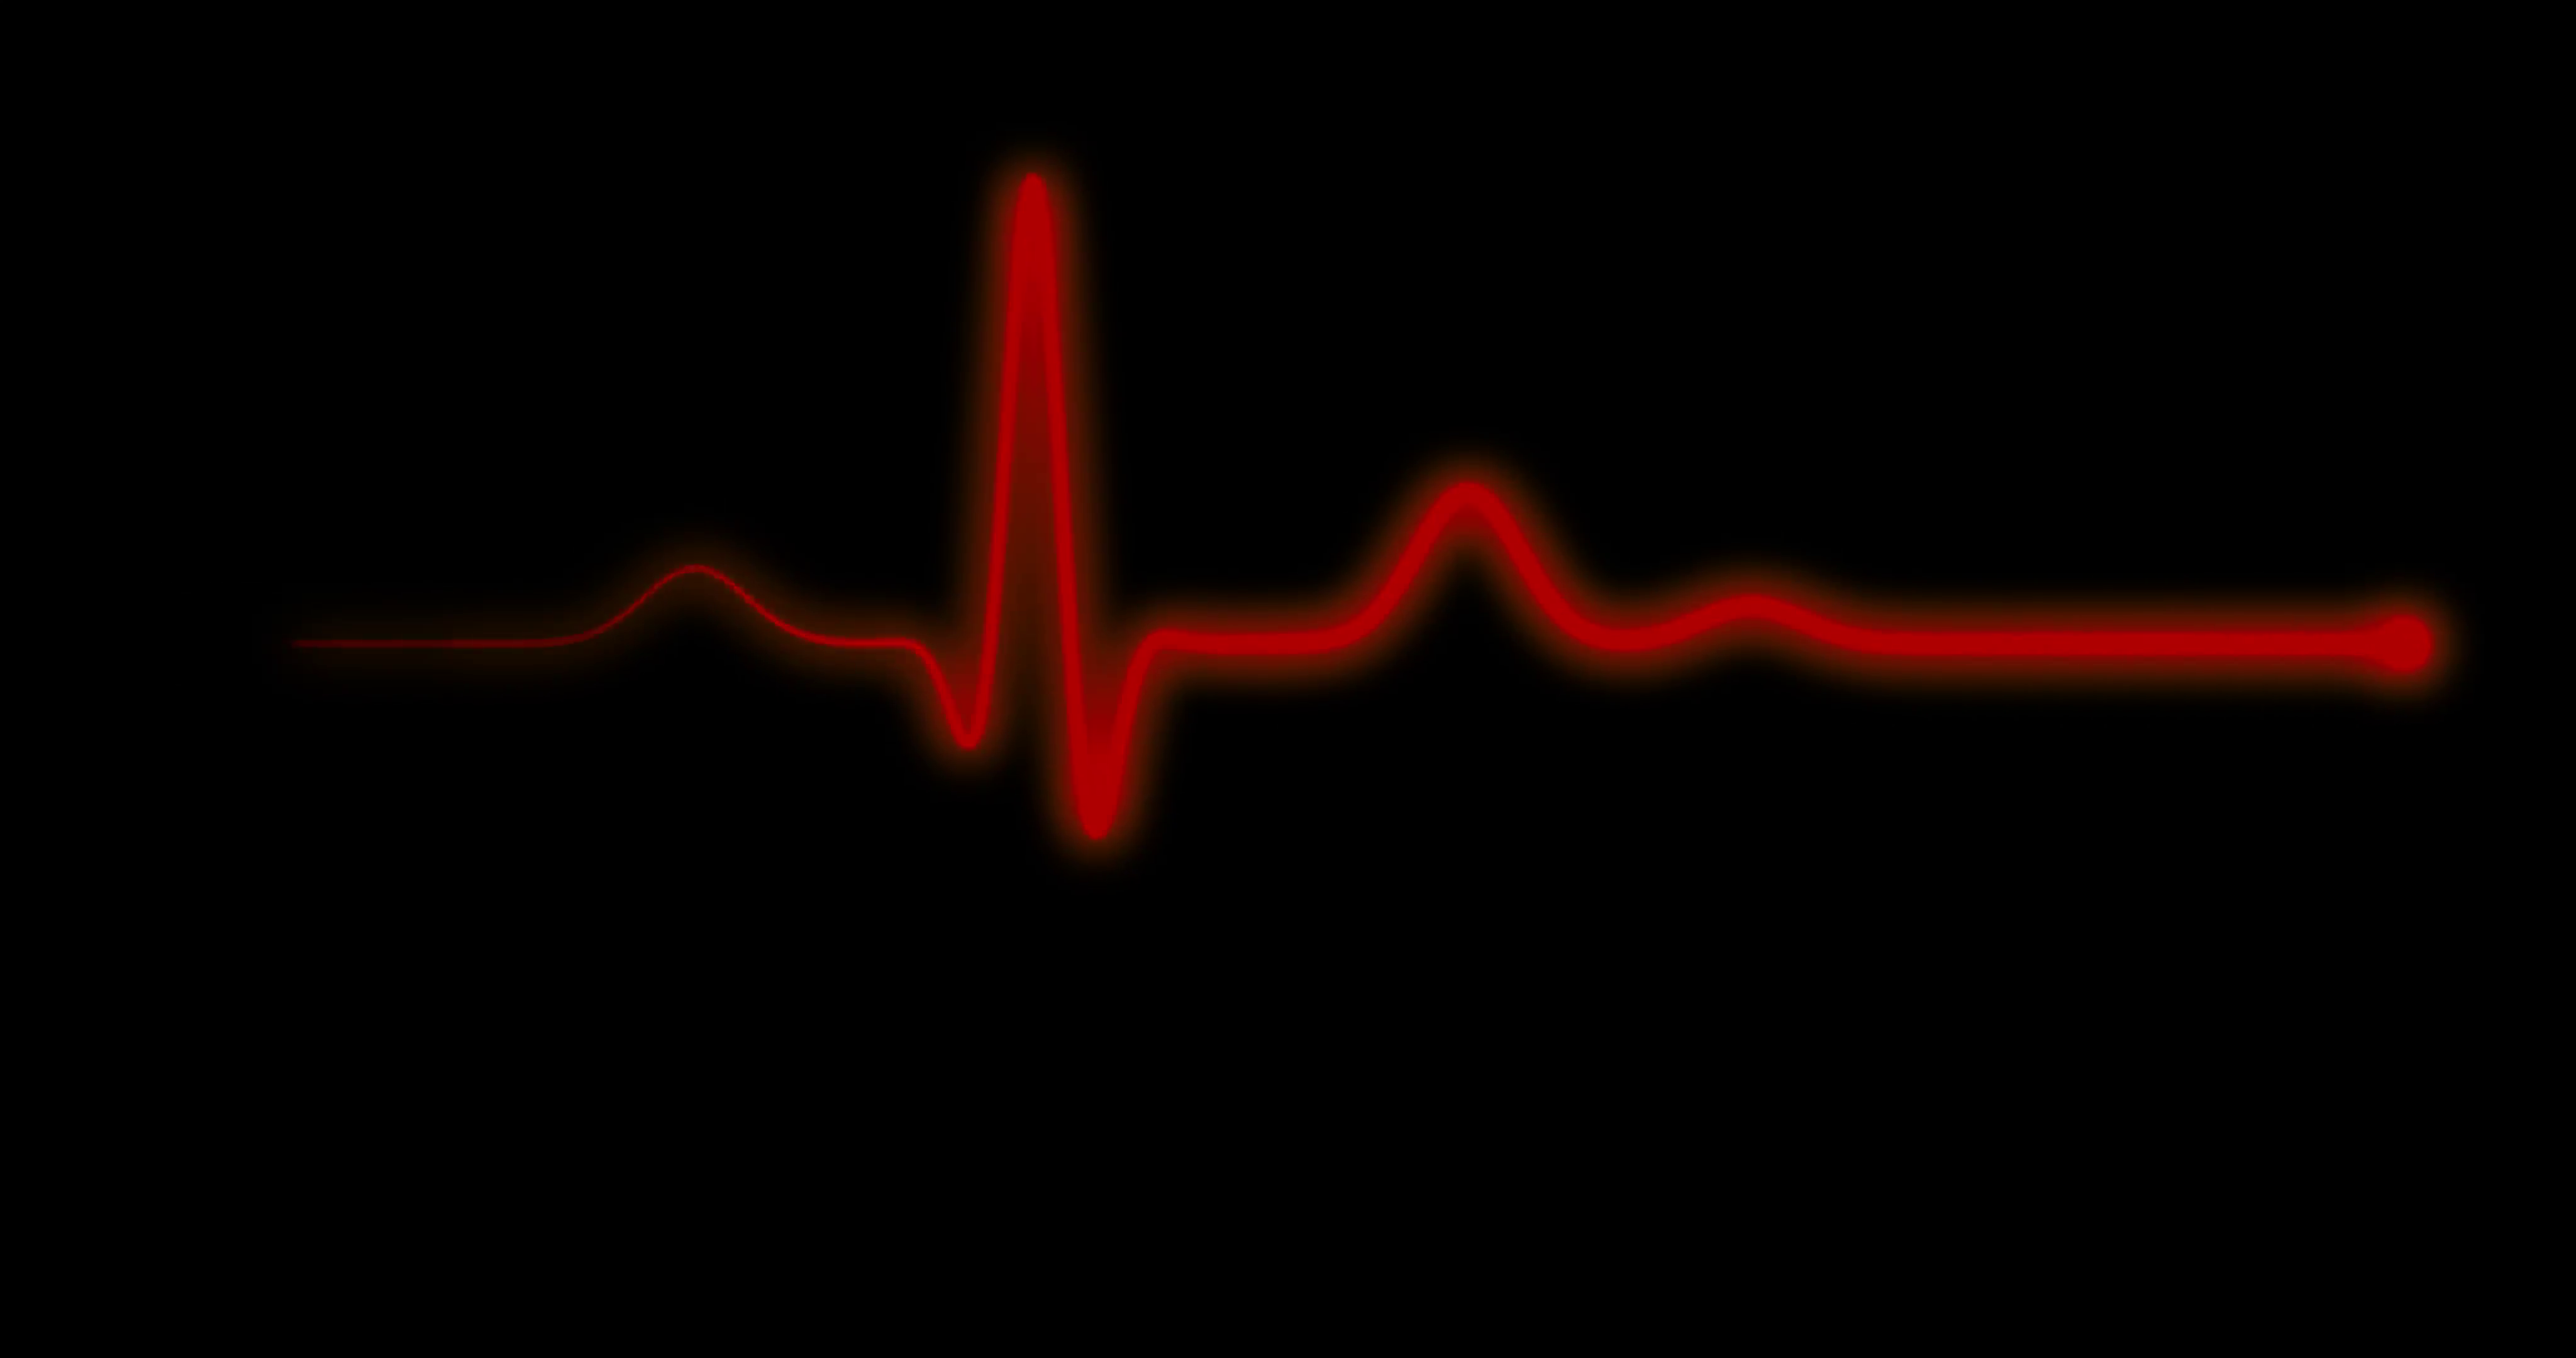 Сердце остановилось умер. Кардиограмма остановки сердца. Остановка сердца на ЭКГ. Пульс остановка сердца. ЭКГ на черном фоне.